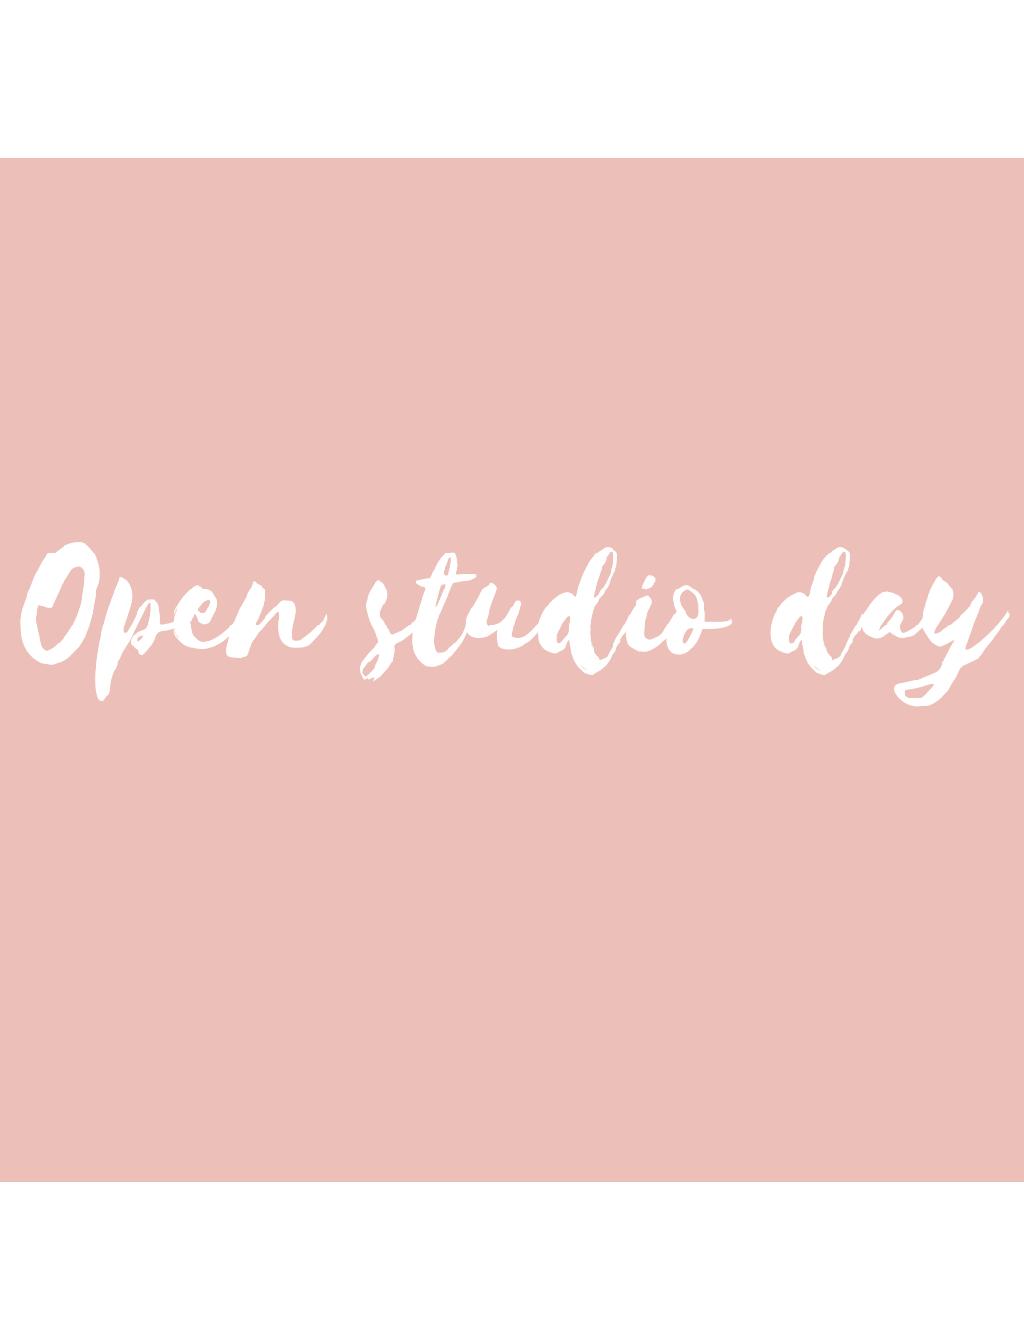 Studio open day 3:30-4:00